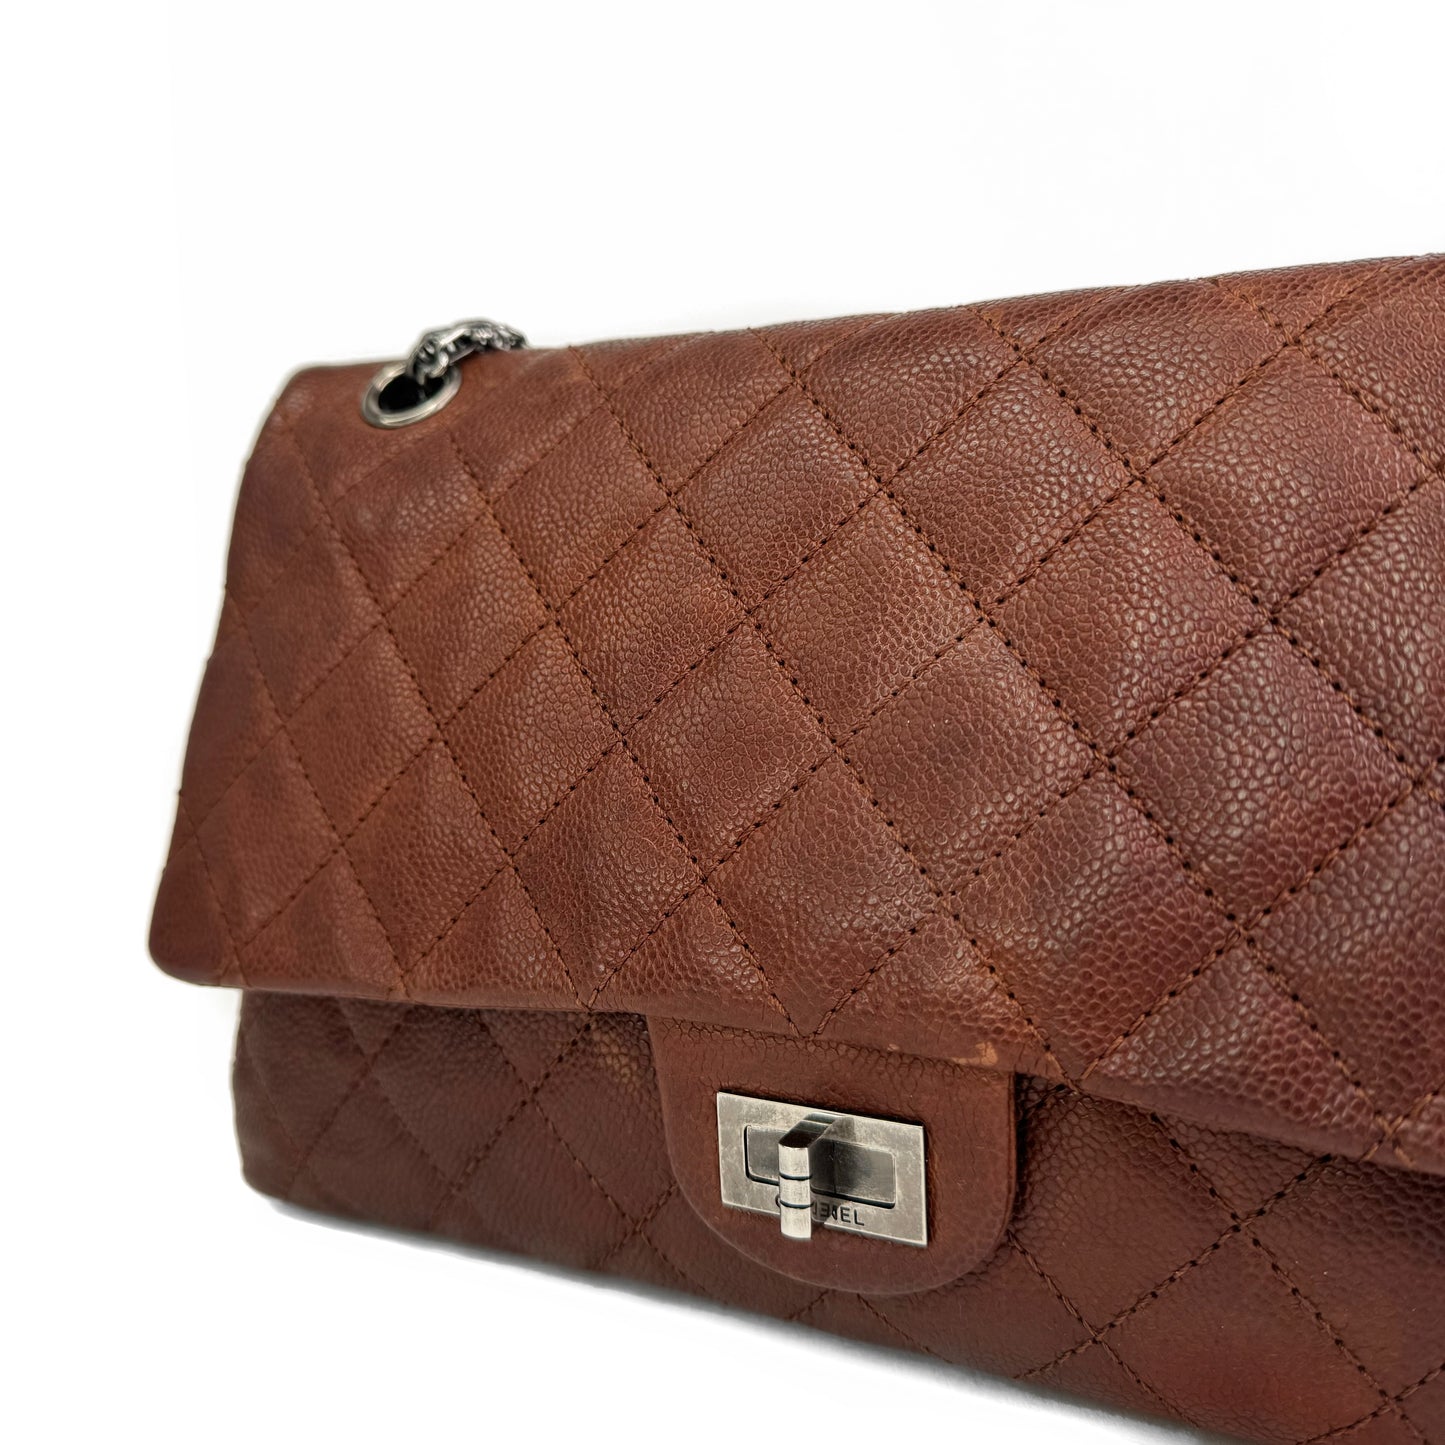 Chanel 2.55 Double Flap Chocolate Medium Bag